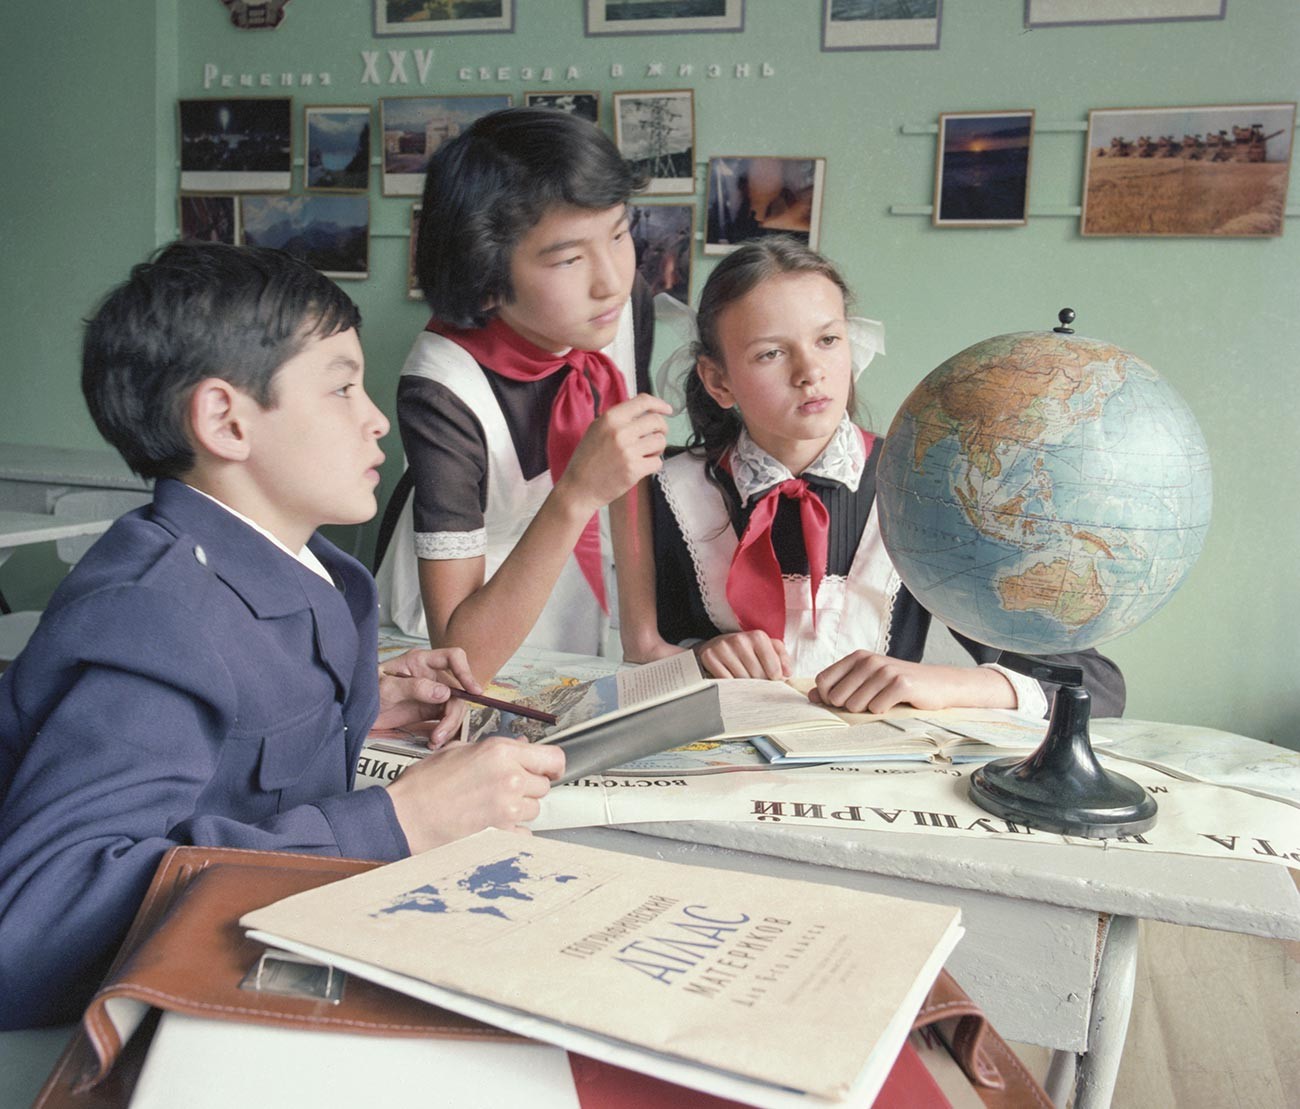 Schoolchildren in Almaty, Kazakh SSR